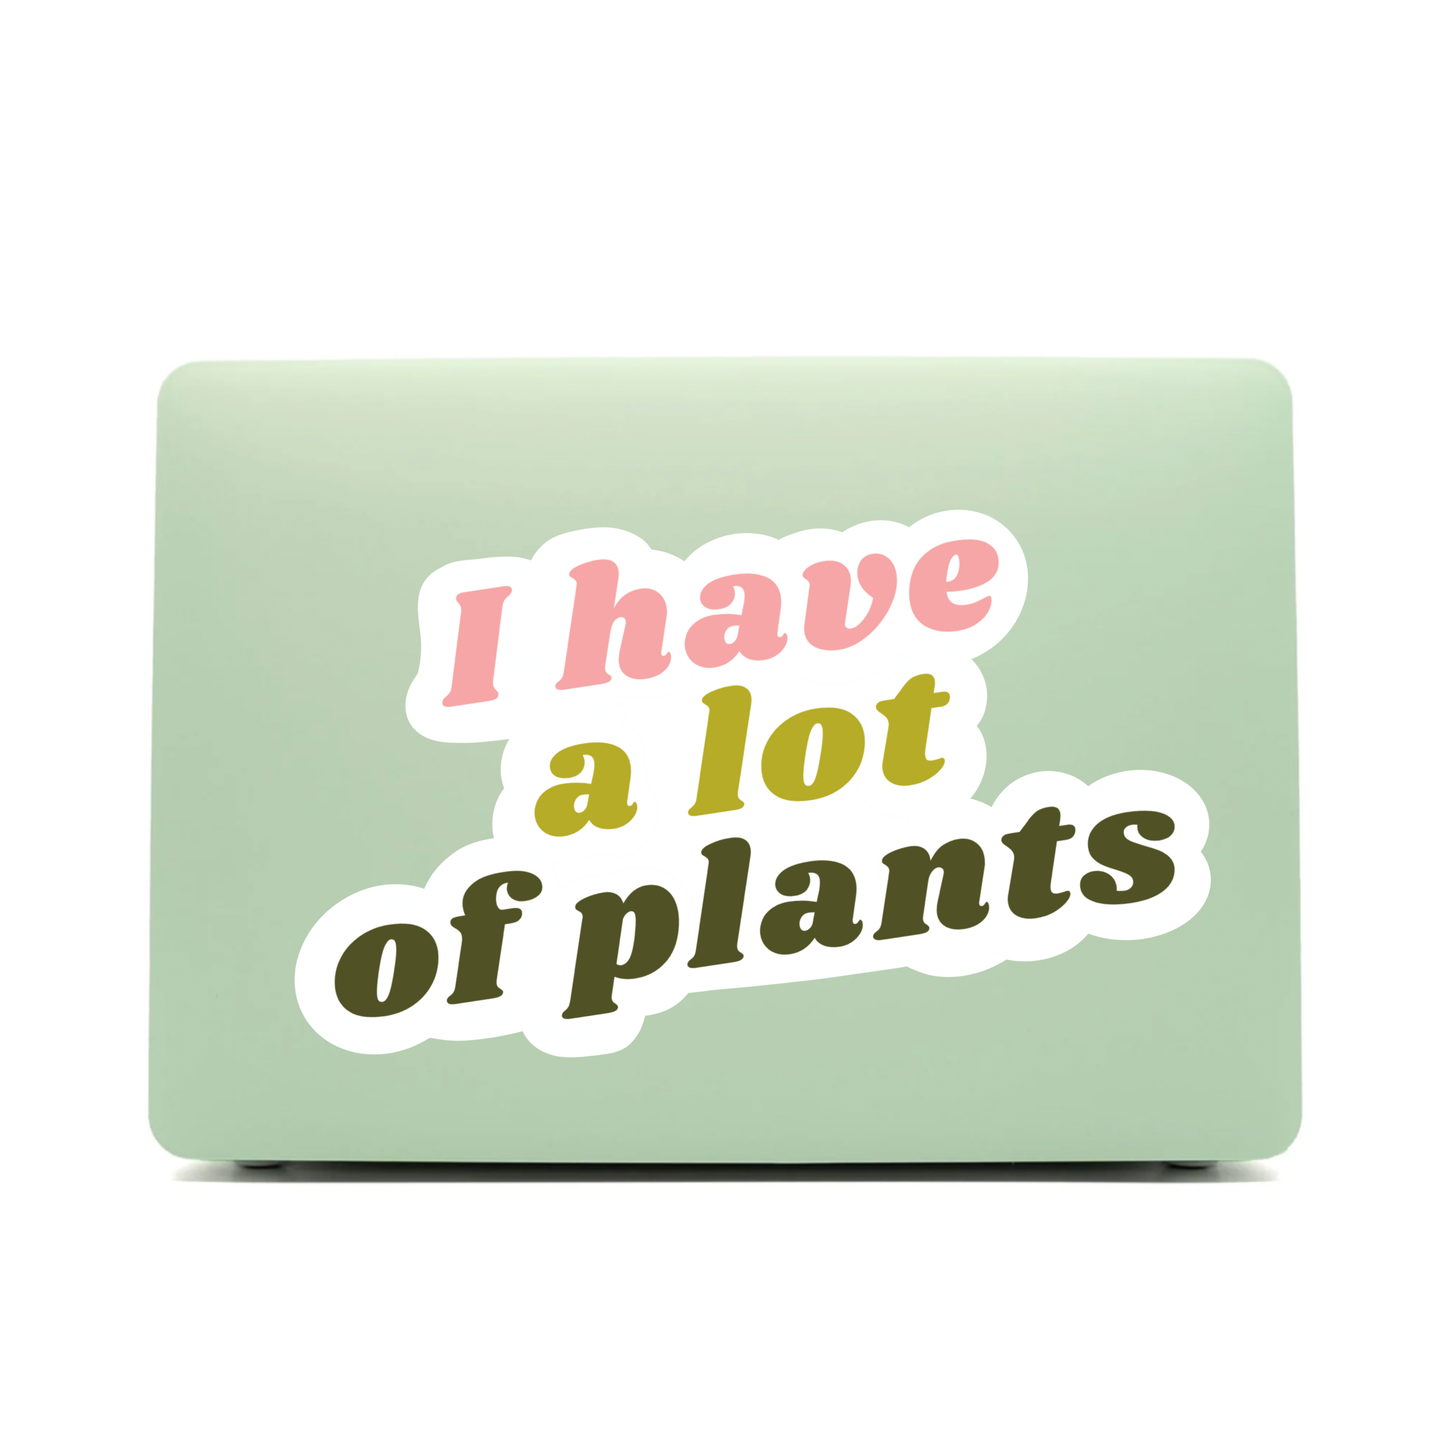 I Have a Lot of Plants Jumbo Bumper Sticker